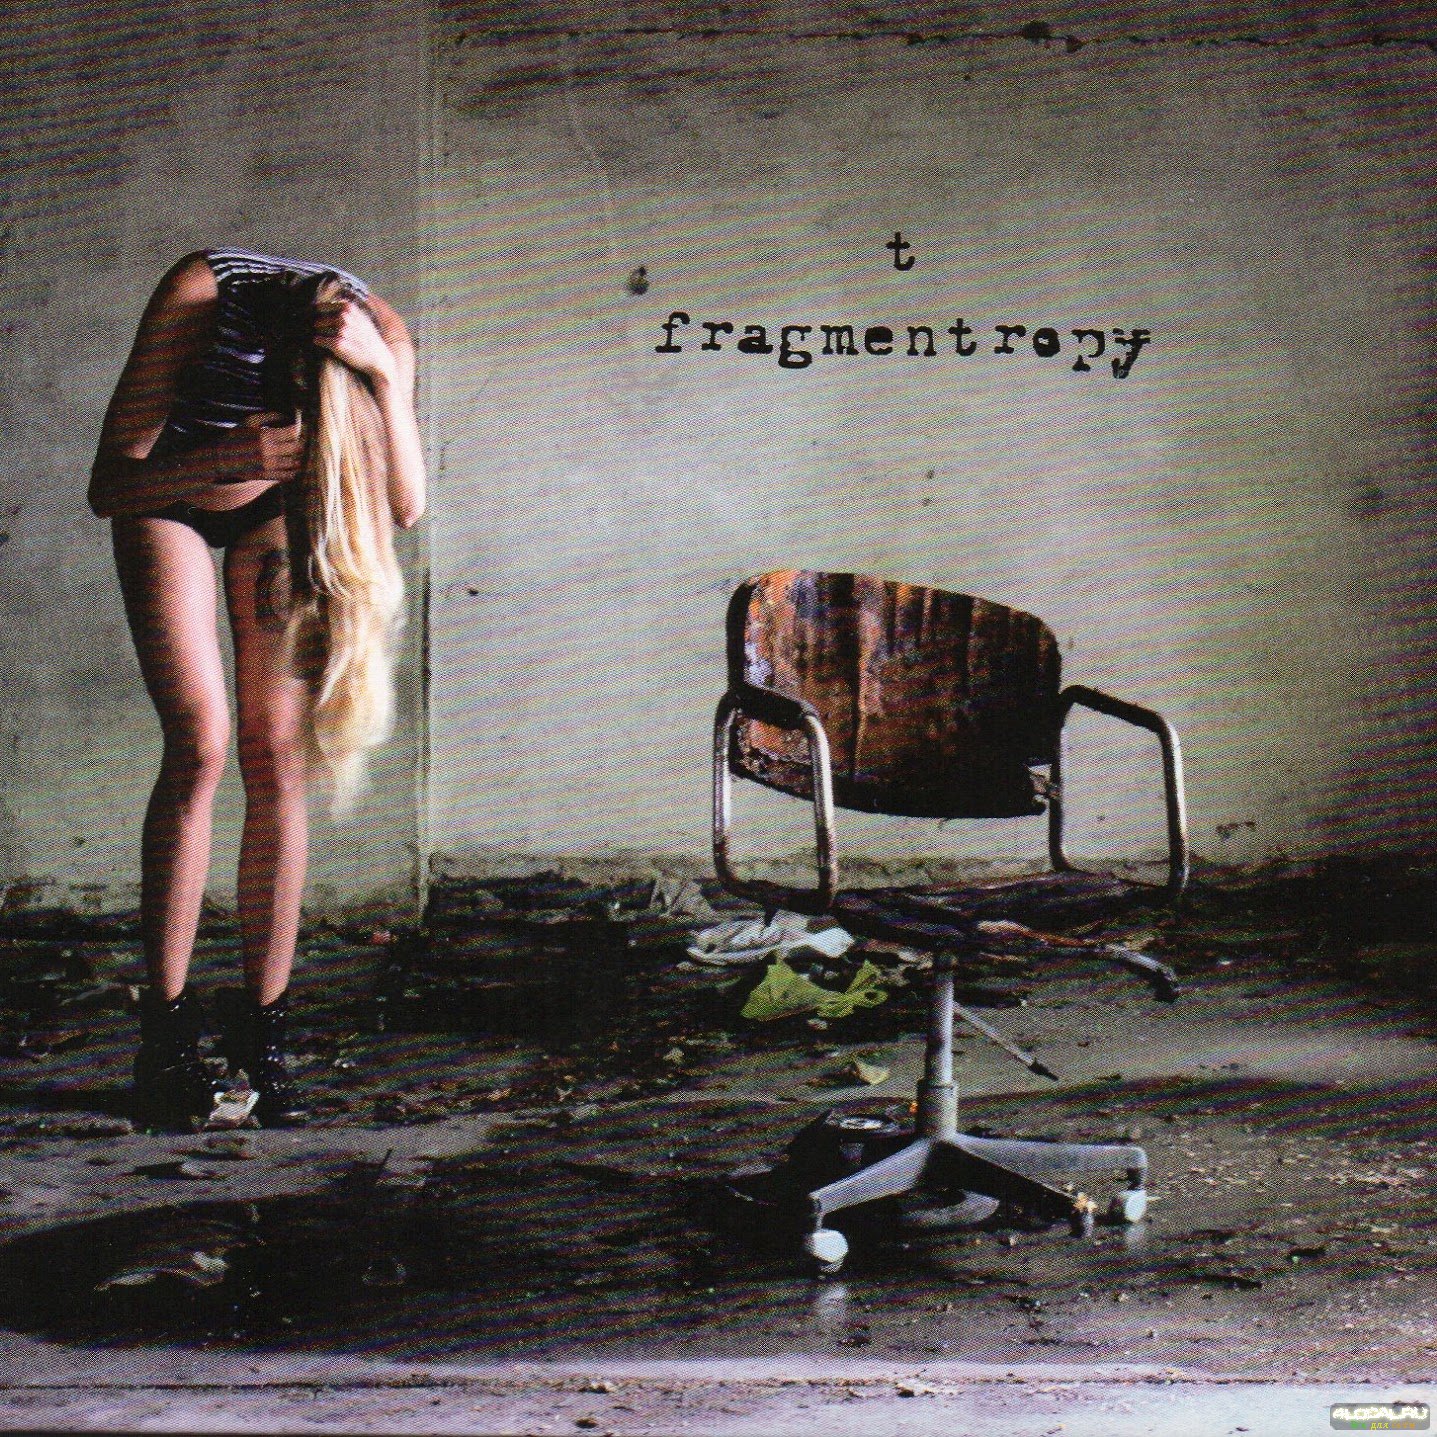 T: Fragmentropy